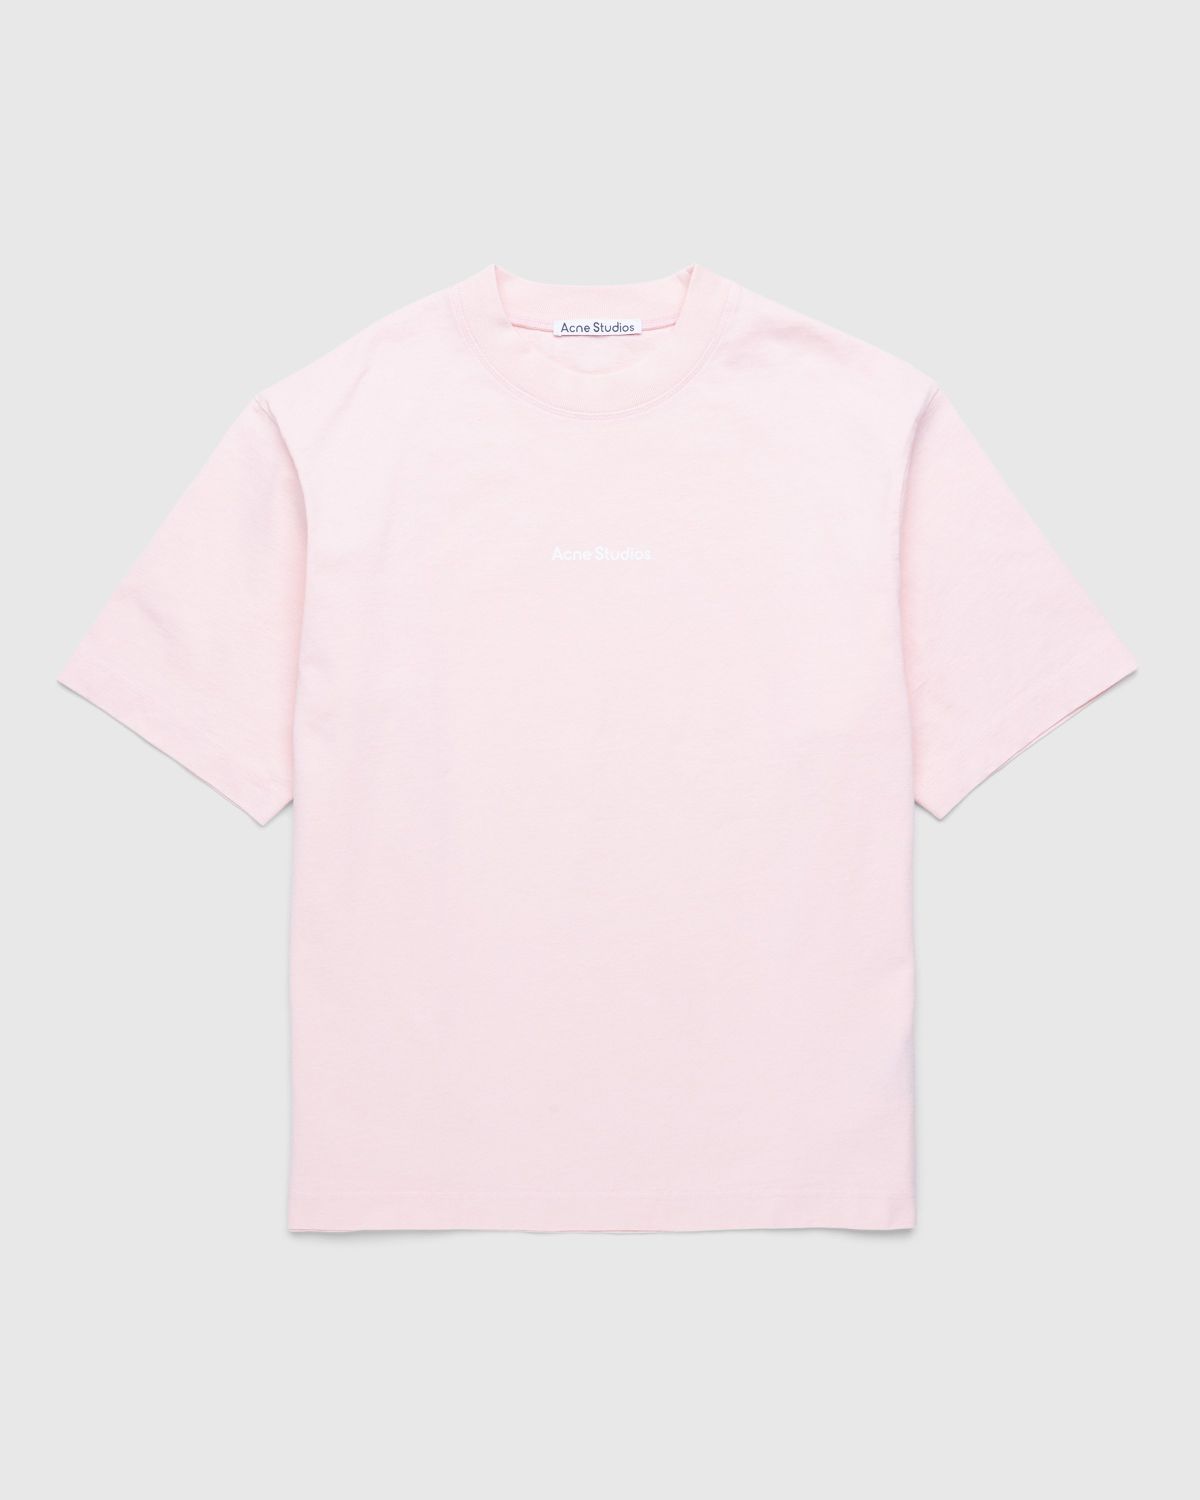 Acne Studios – Logo T-Shirt Pale Pink | Highsnobiety Shop